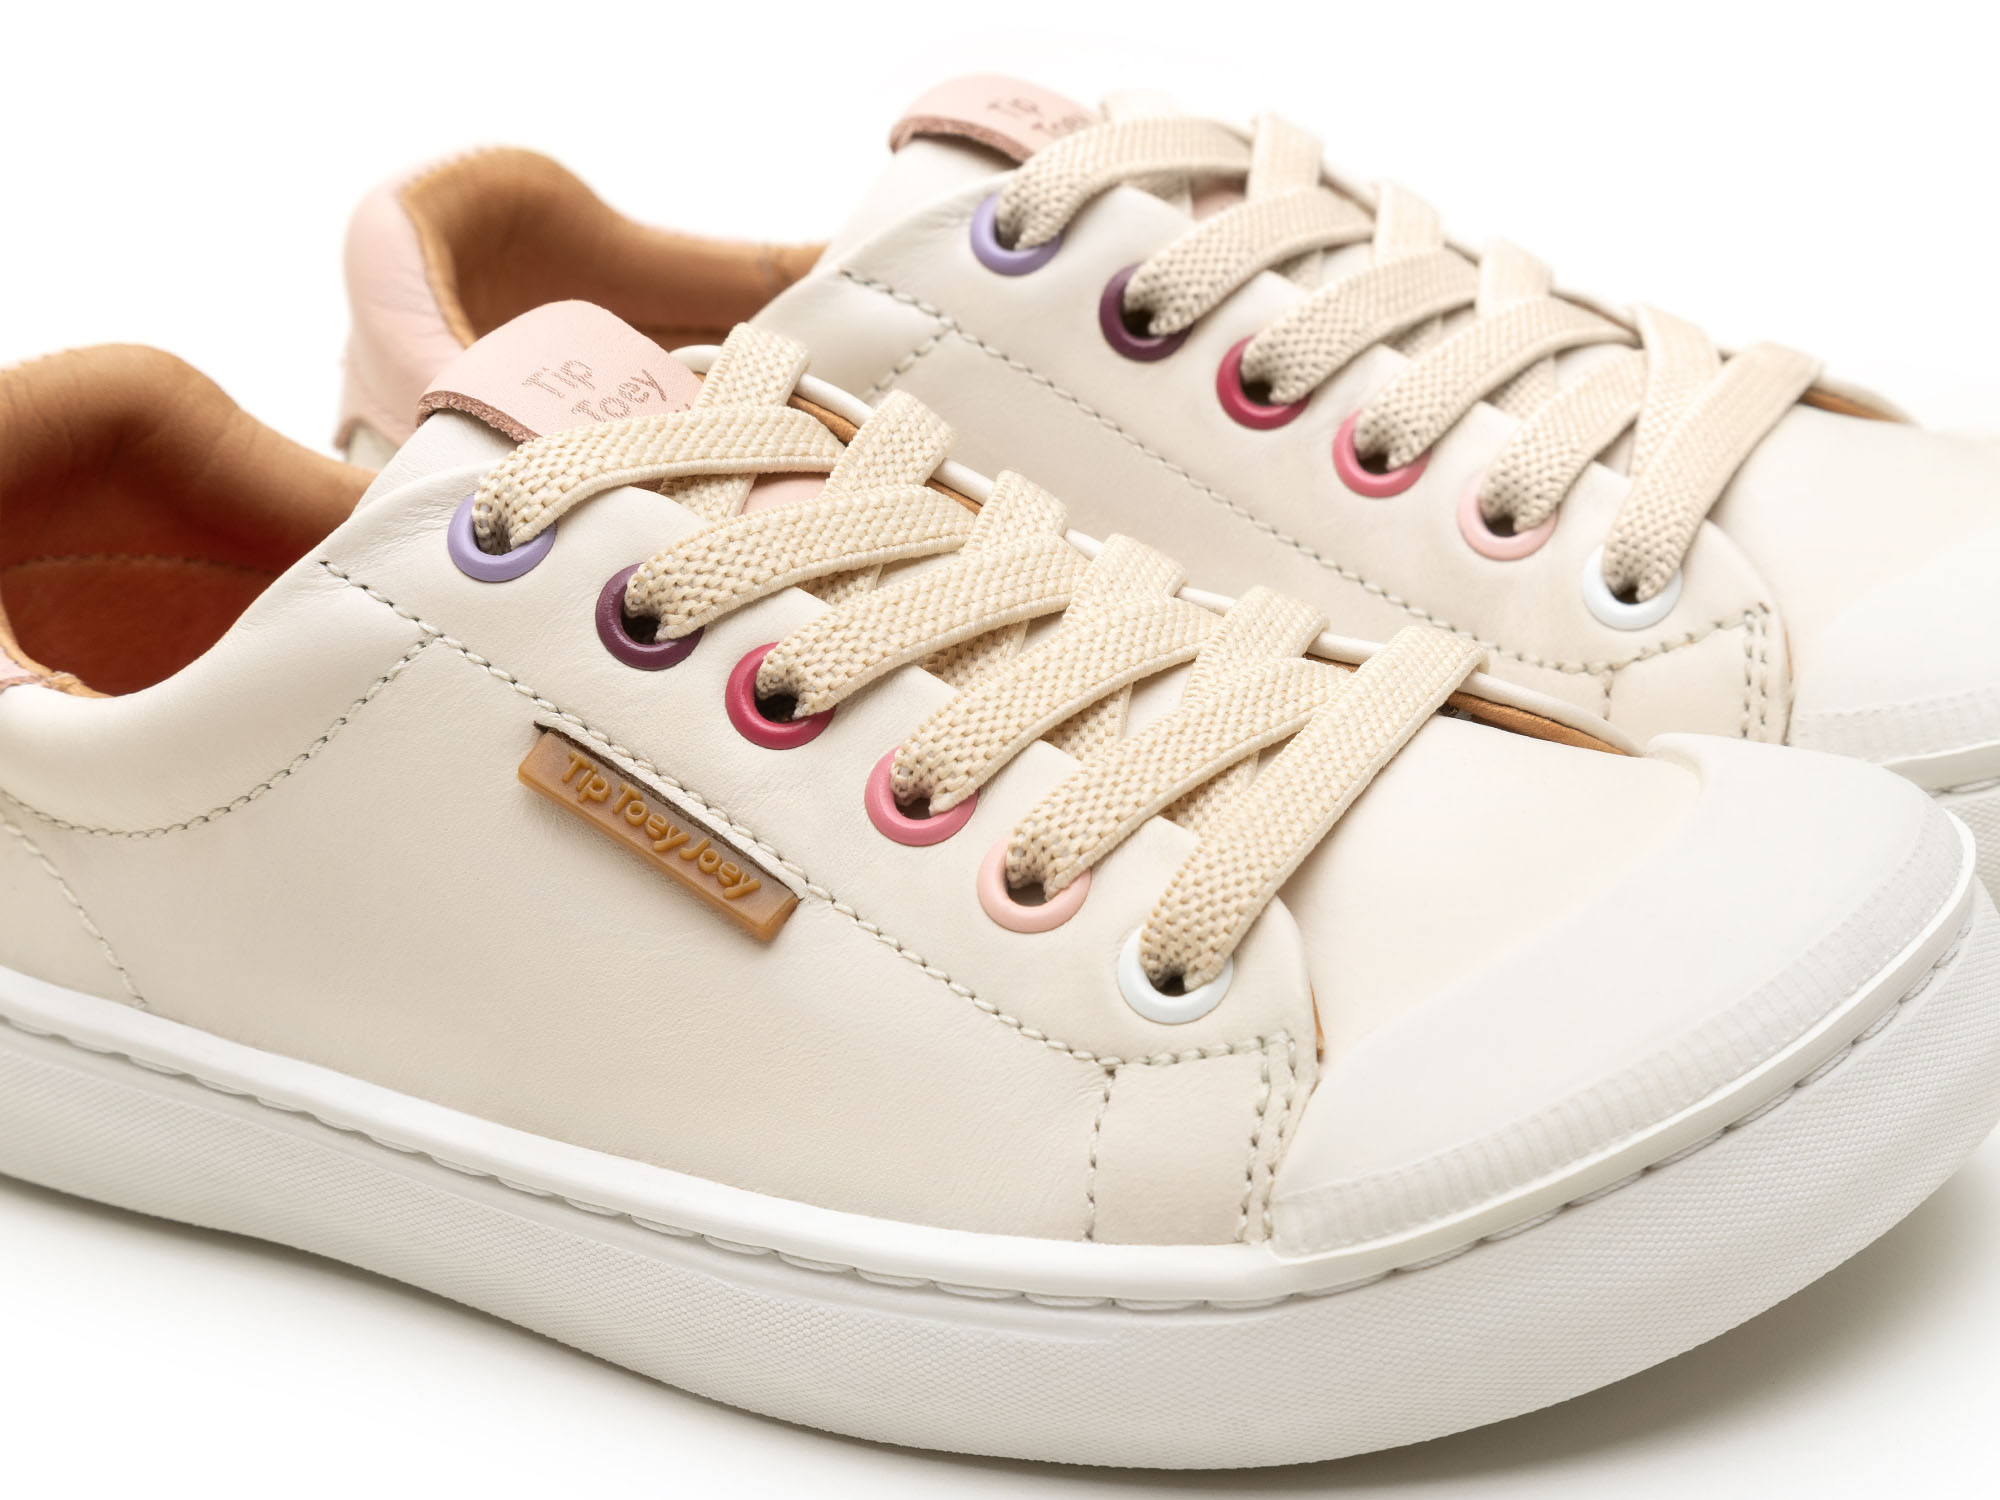 RUN & PLAY Sneakers for Girls Volt Colors | Tip Toey Joey - Australia - 5